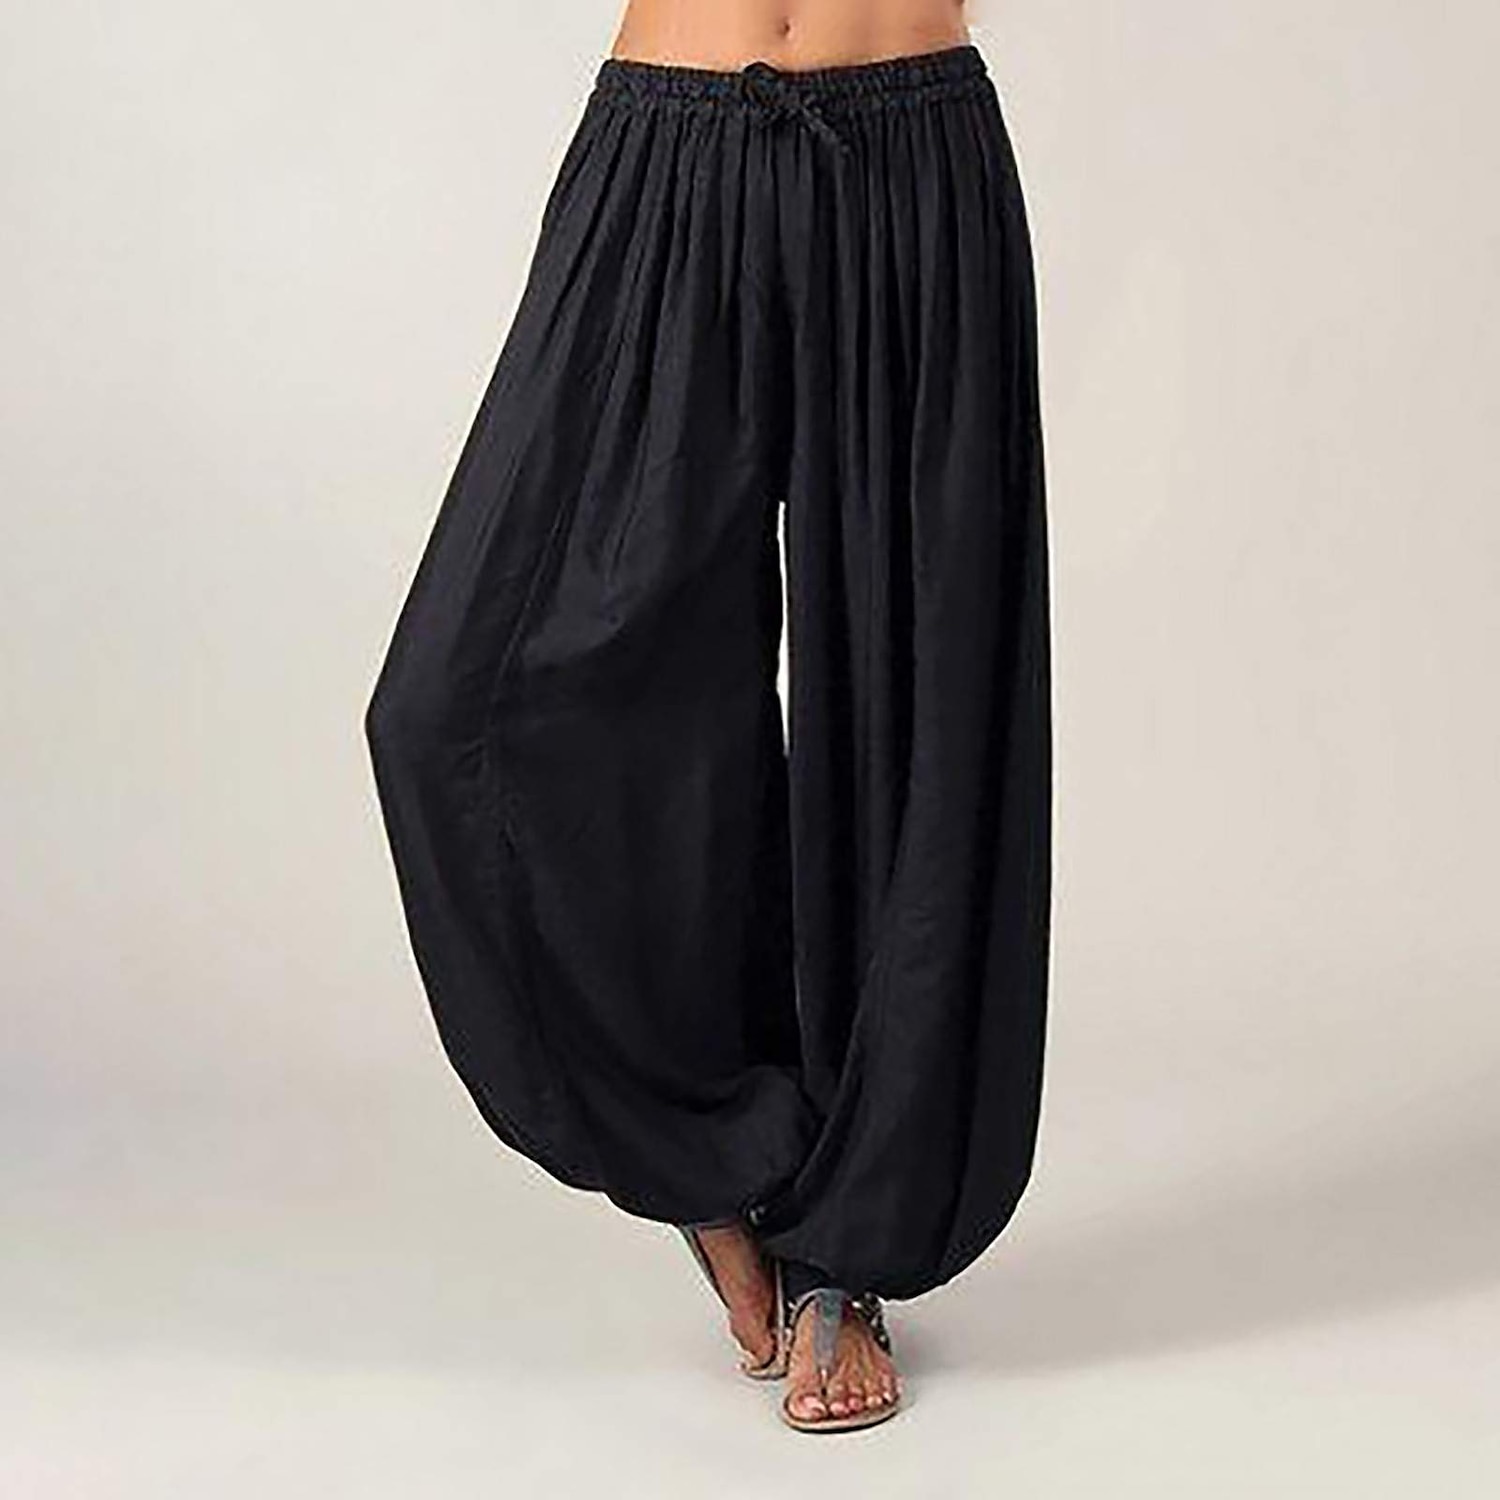 Pantalones de yoga para mujer - Pantalones harén de yoga